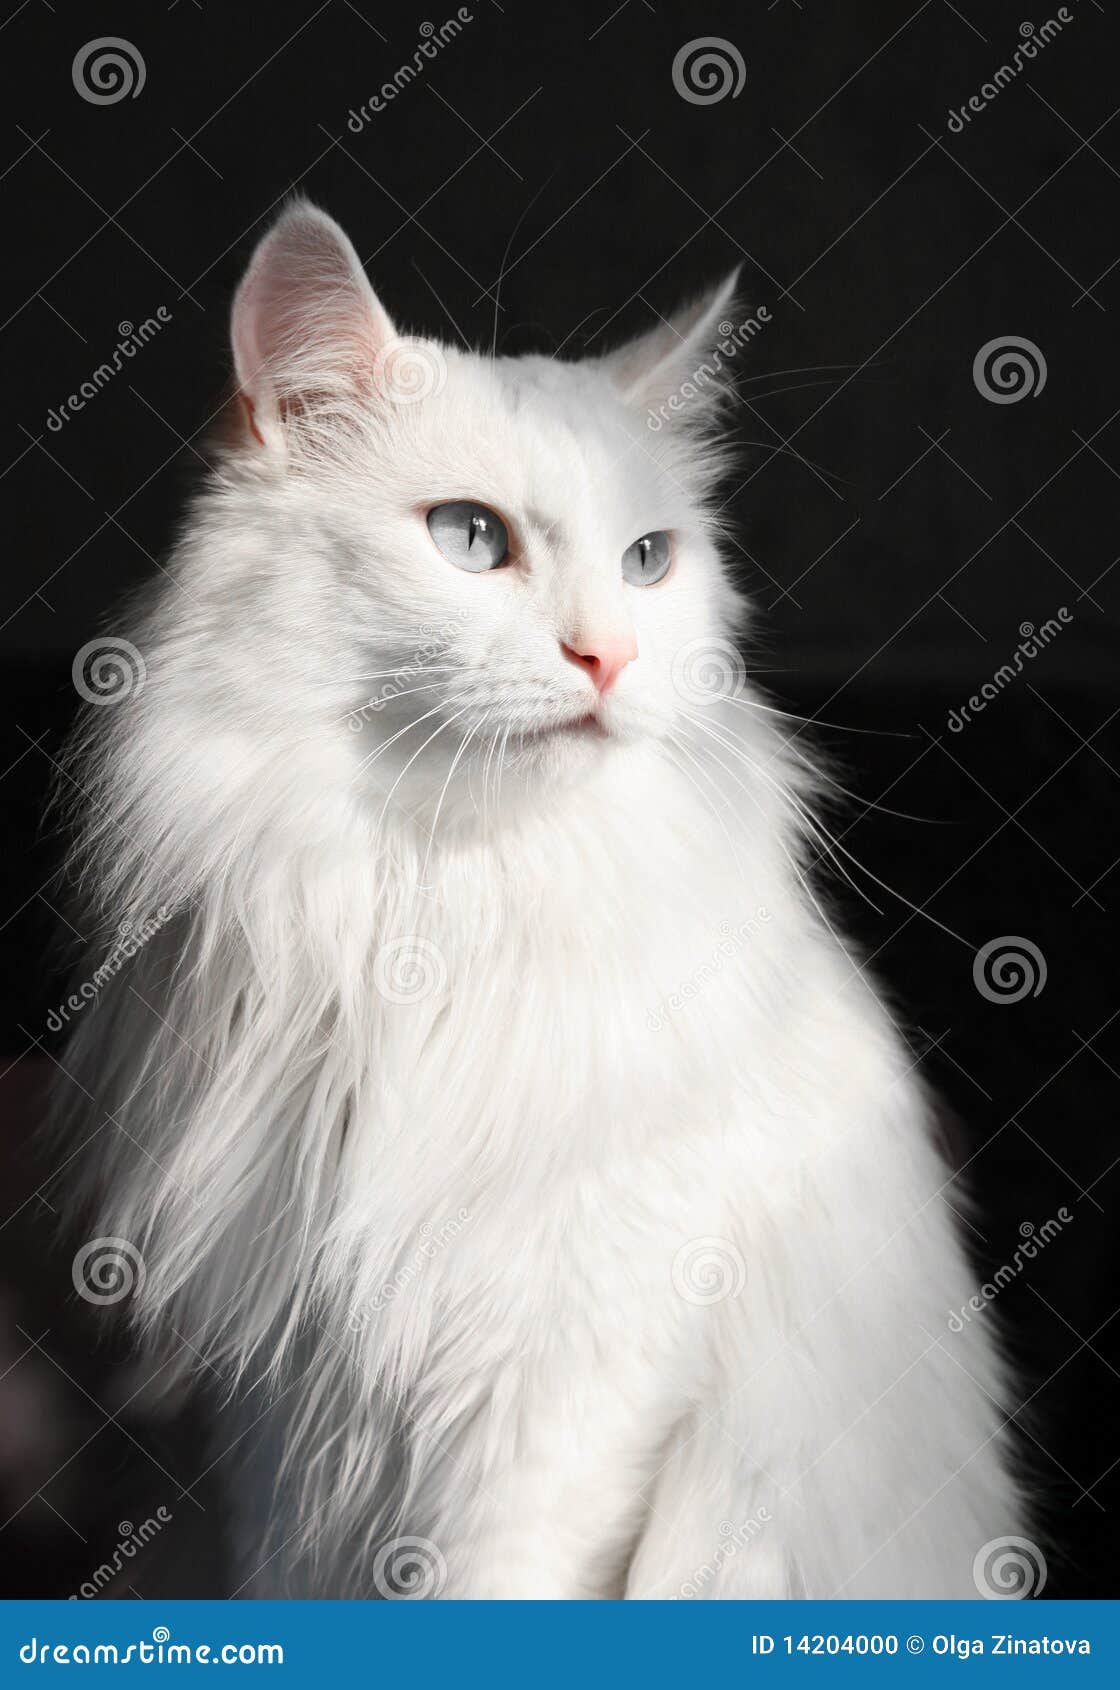 https://thumbs.dreamstime.com/z/white-angora-cat-14204000.jpg